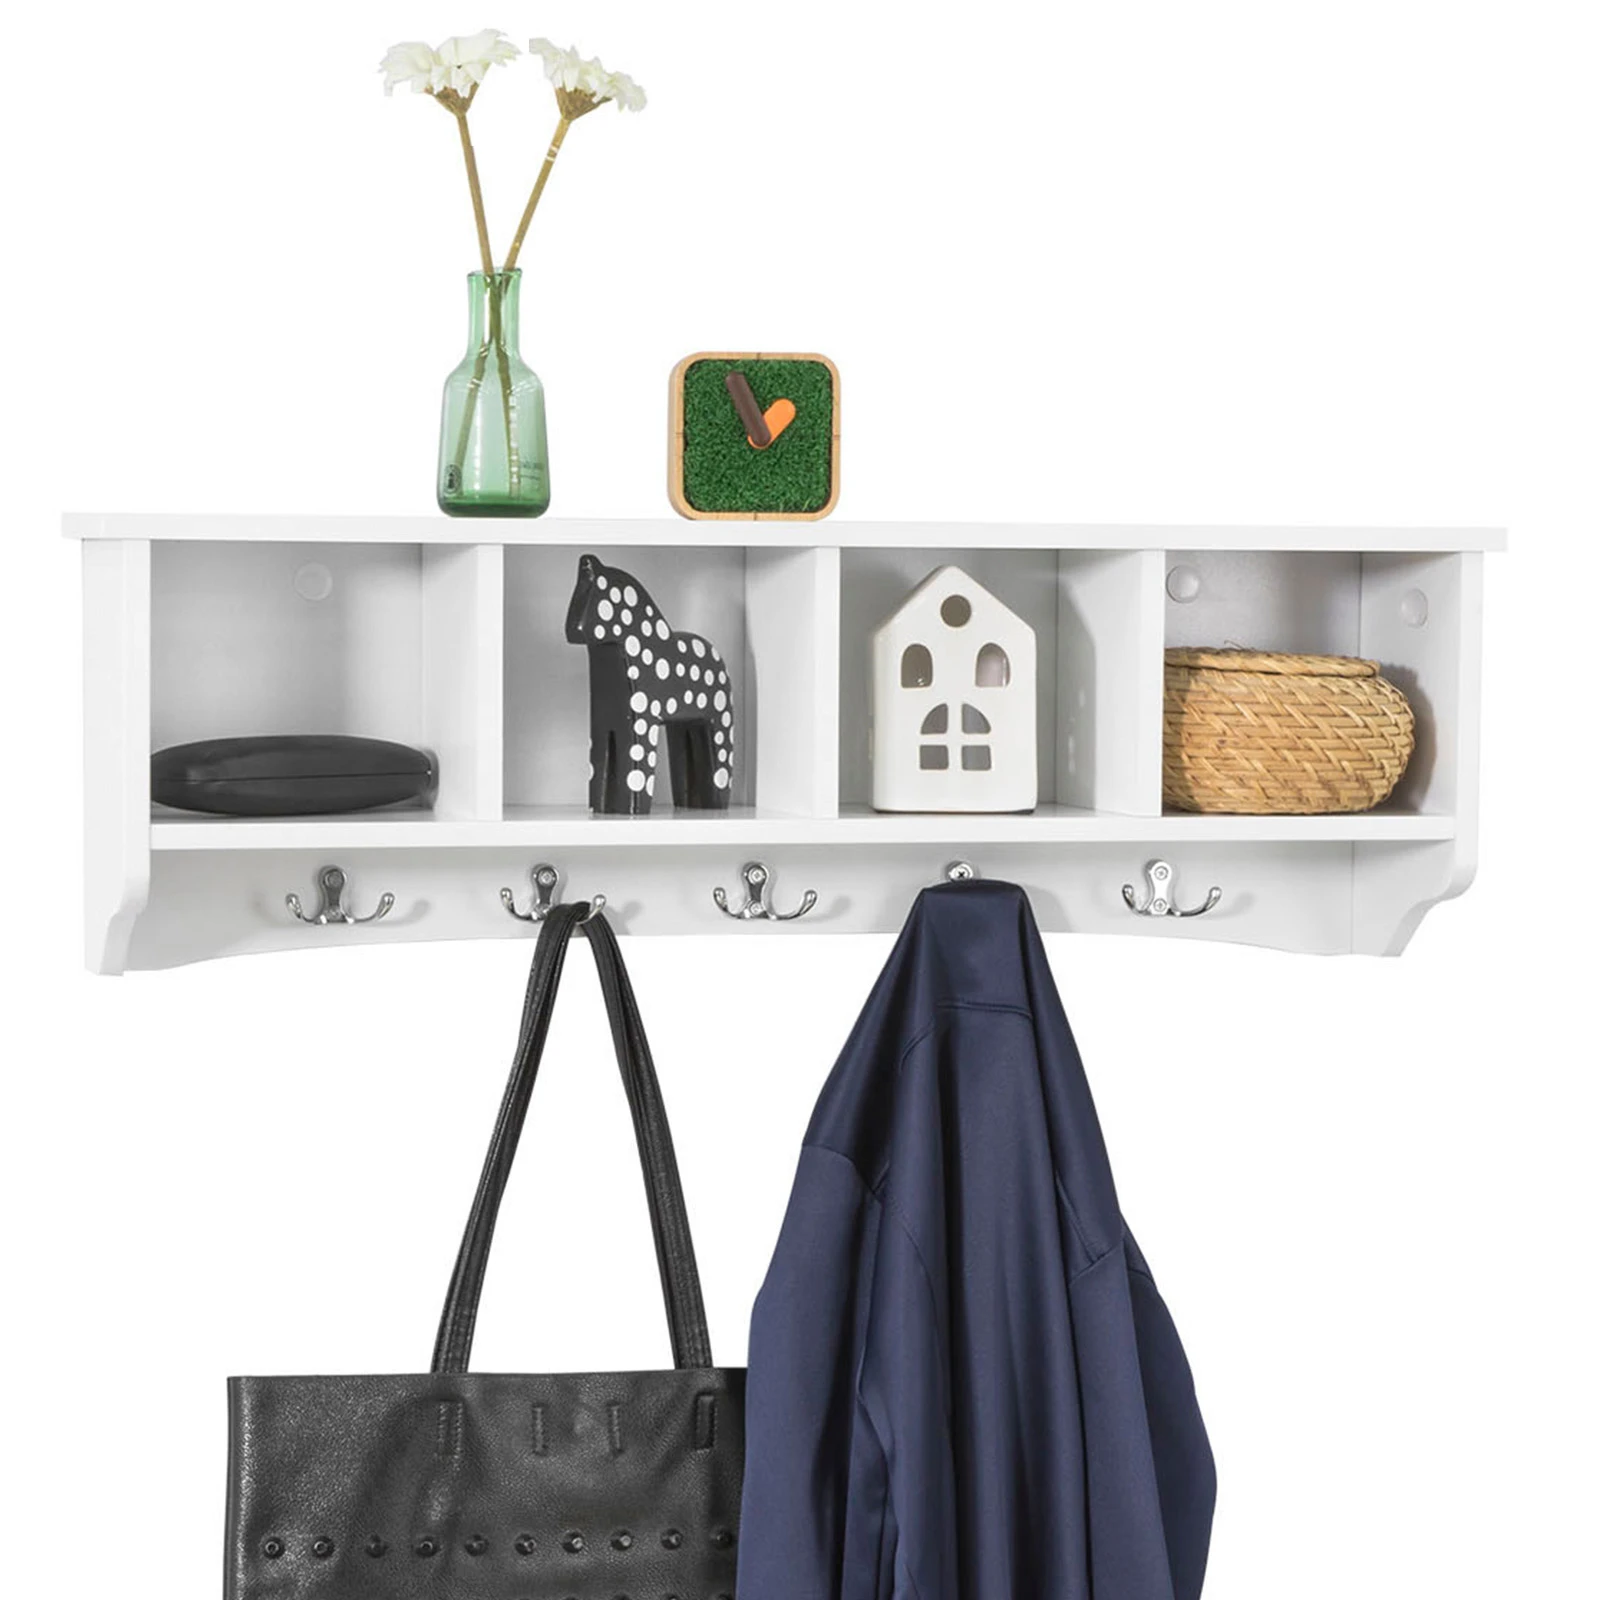 SoBuy ® Wall Cabinet Wall Coat Rack frg178-w Wall Shelf Floating Shelf with 2 drawers